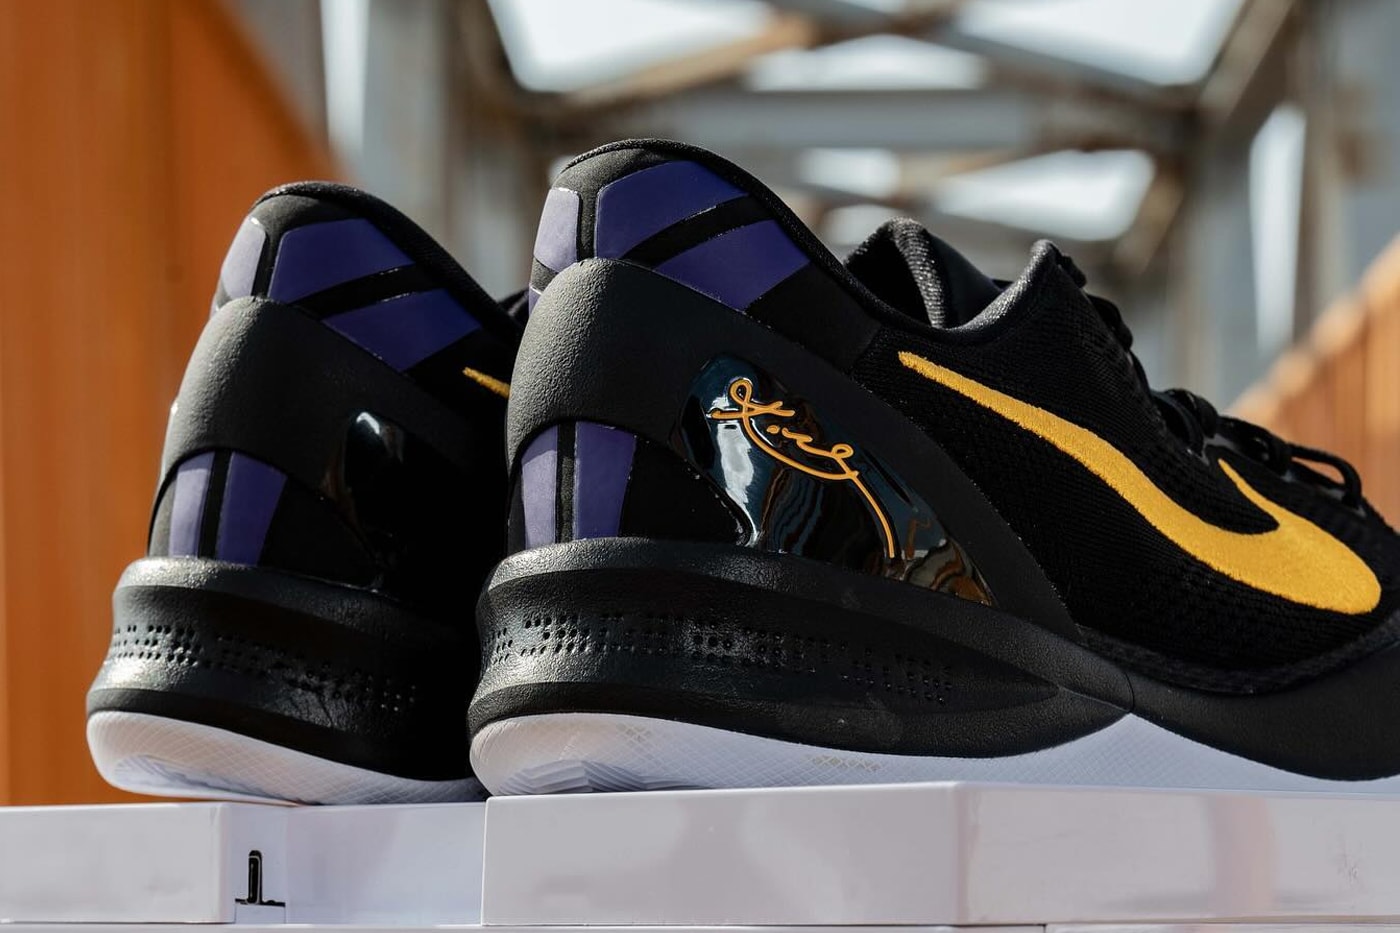 Detailed Look at the Nike Kobe 8 Protro "Hollywood Nights" HF9550-001 kobe bryant black mamba basketball shoes sneakers black gold and purple Black/University Gold-White-Court Purple